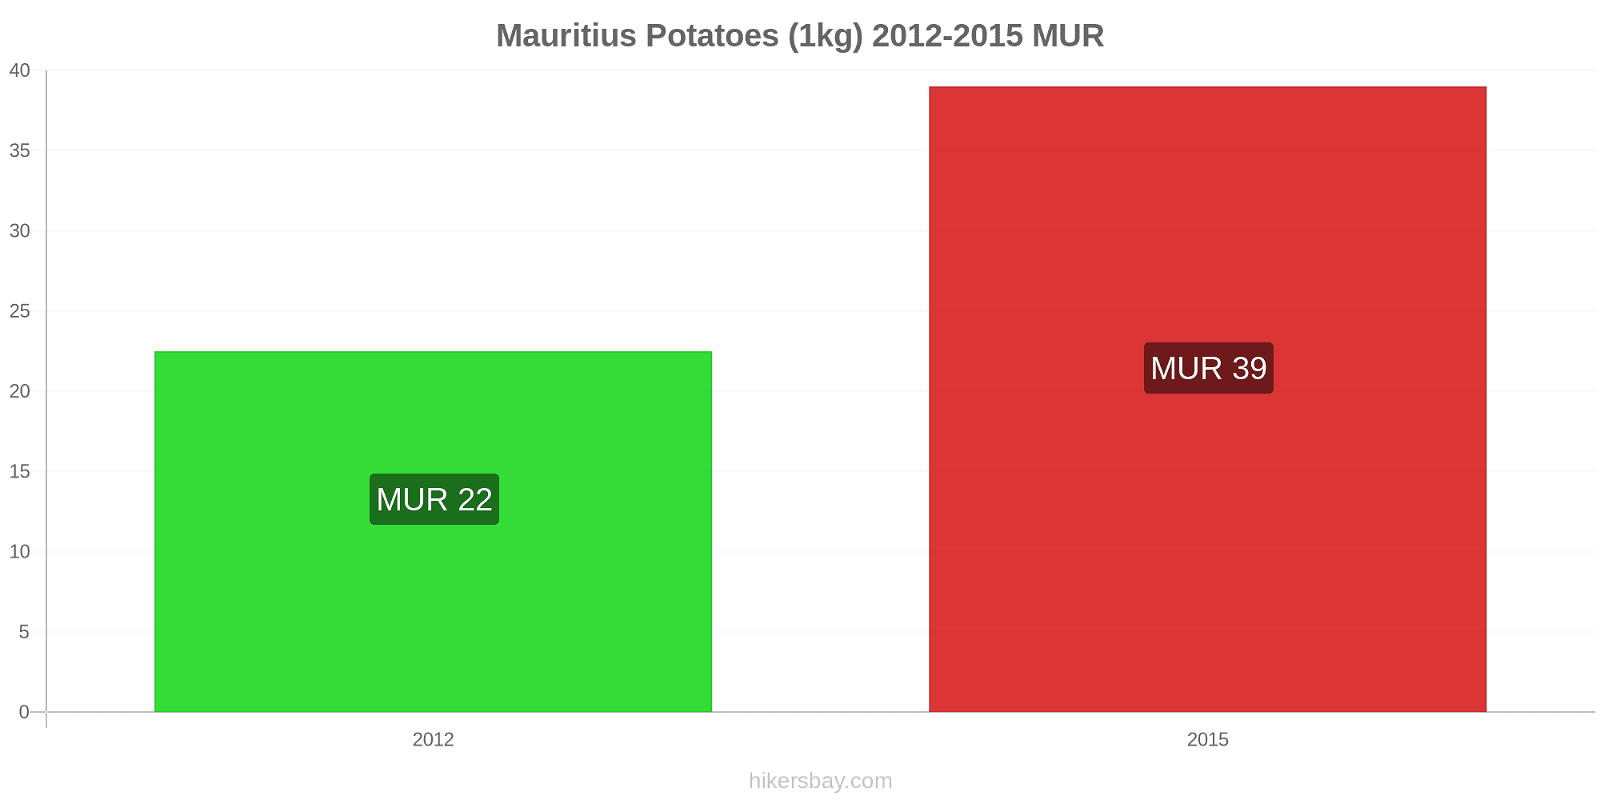 Mauritius price changes Potatoes (1kg) hikersbay.com